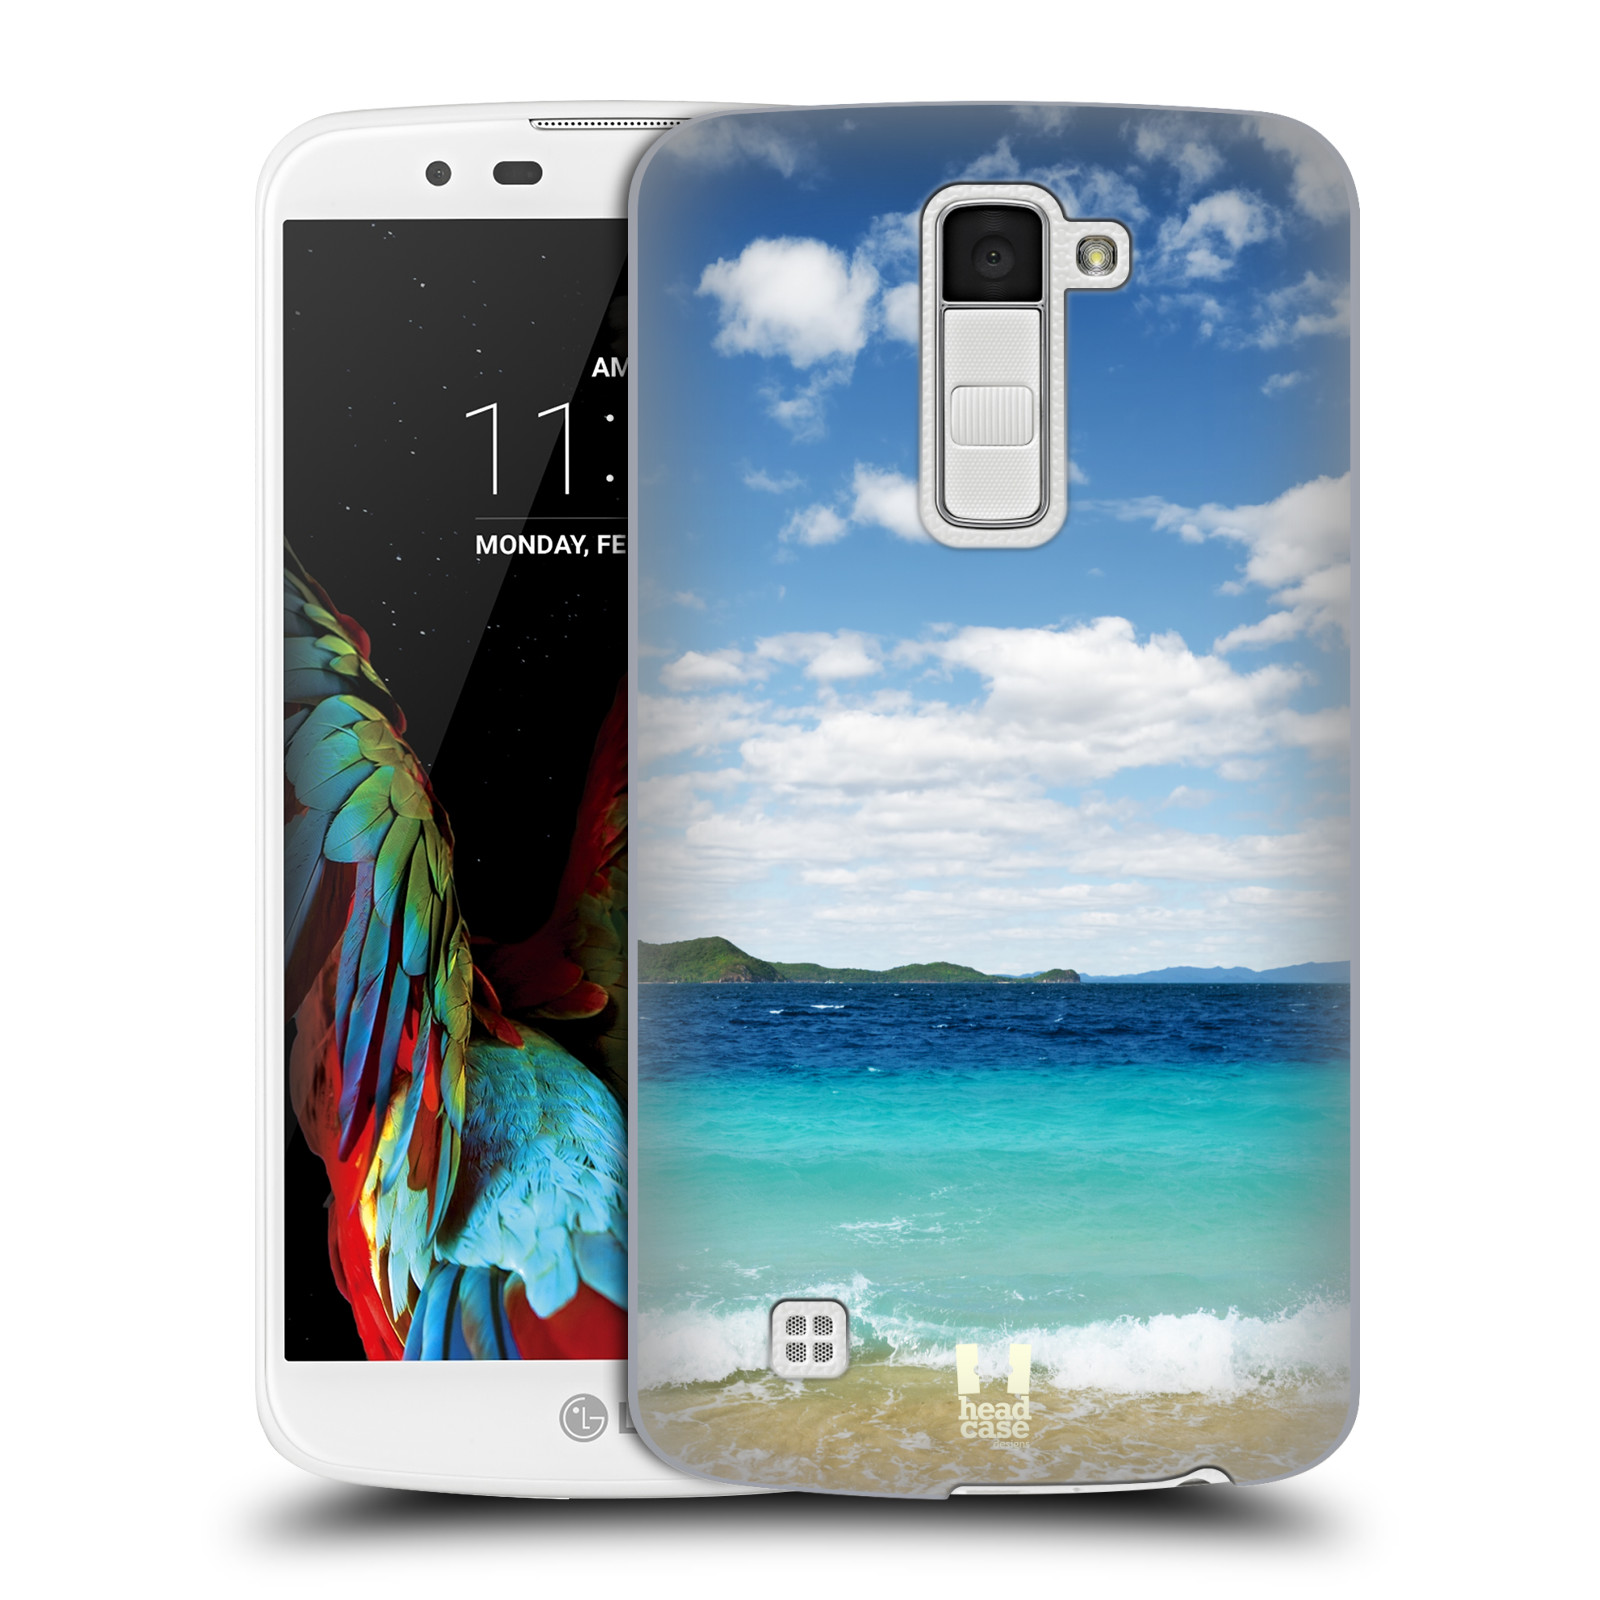 HEAD CASE plastový obal na mobil LG K10 vzor Pláže a Moře VZDÁLENÝ OSTROV